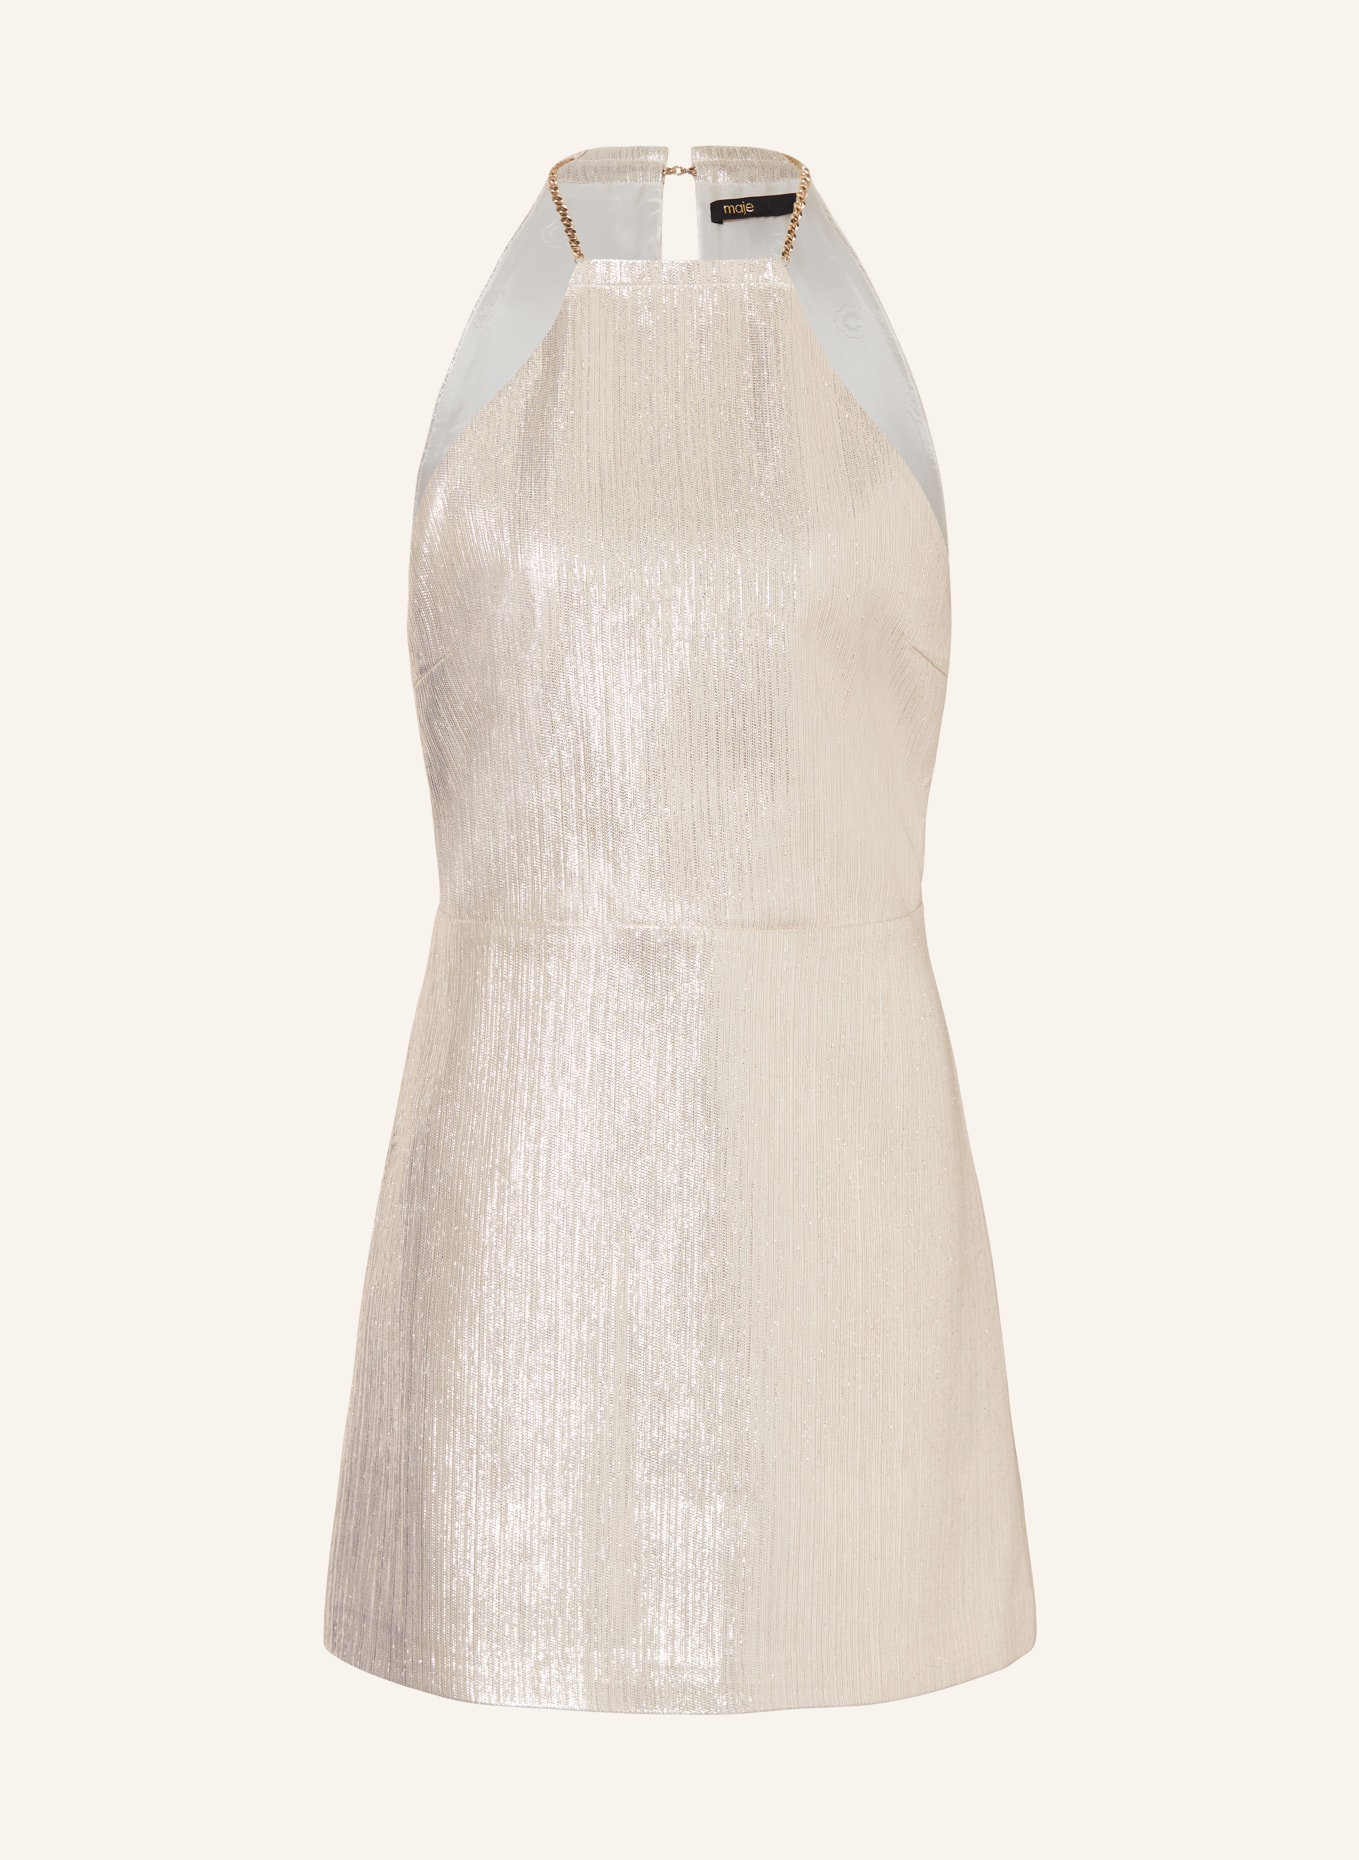 maje Kleid mit Glitzergarn, Farbe: SILBER (Bild 1)